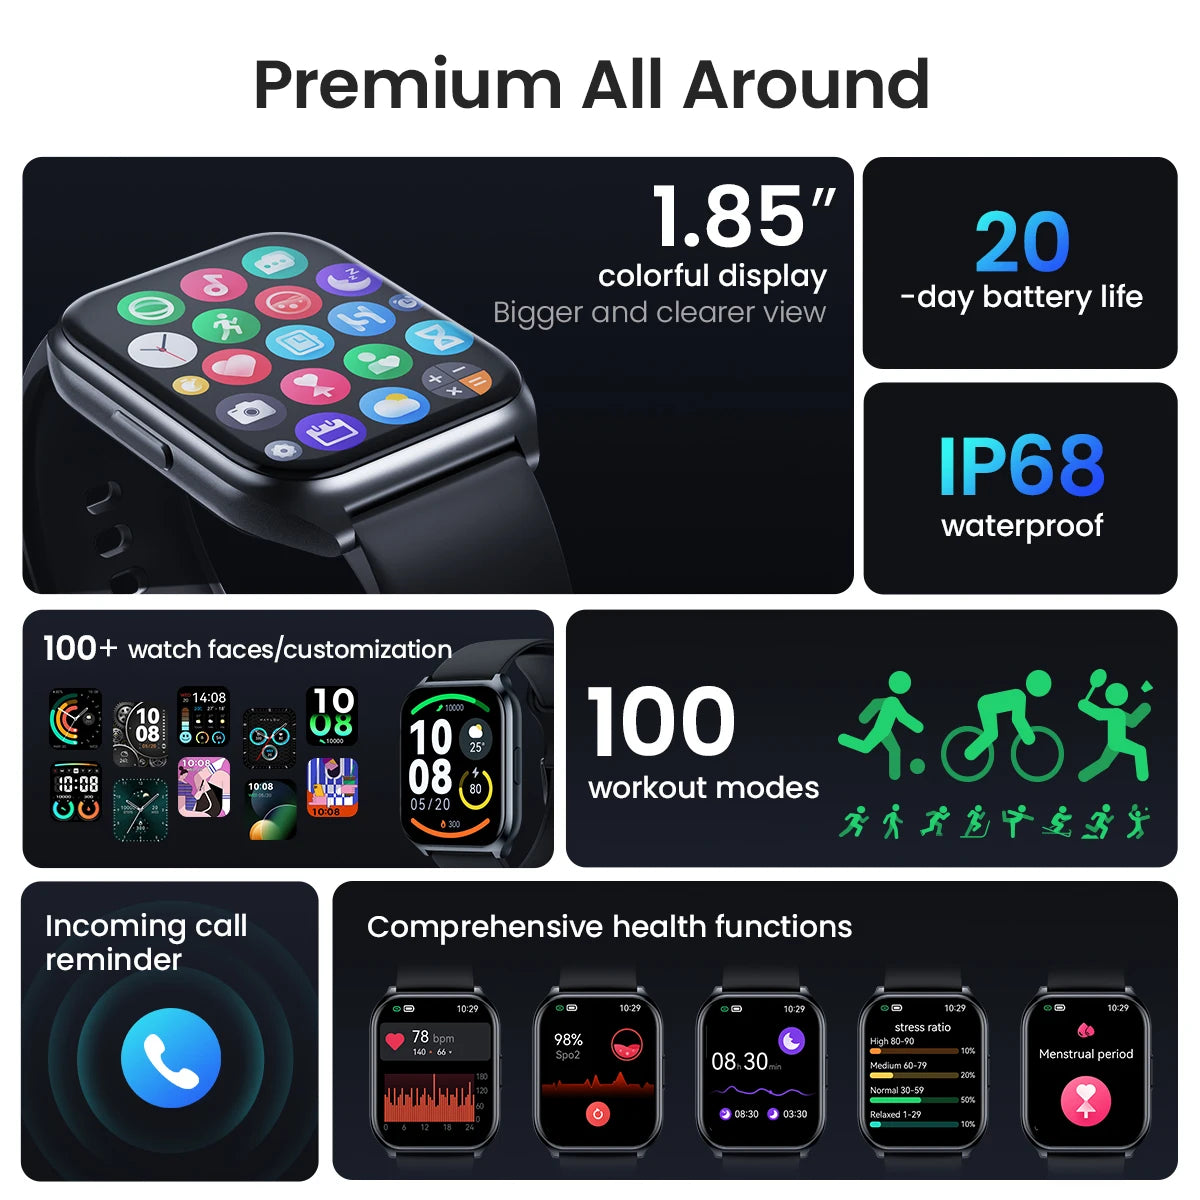 HAYLOU Watch 2 Pro (LS02 Pro) Smart Watch 1.85'' HD Display SpO2 Heart Rate Monitor 100 Workout Modes Smartwatch for Men Women